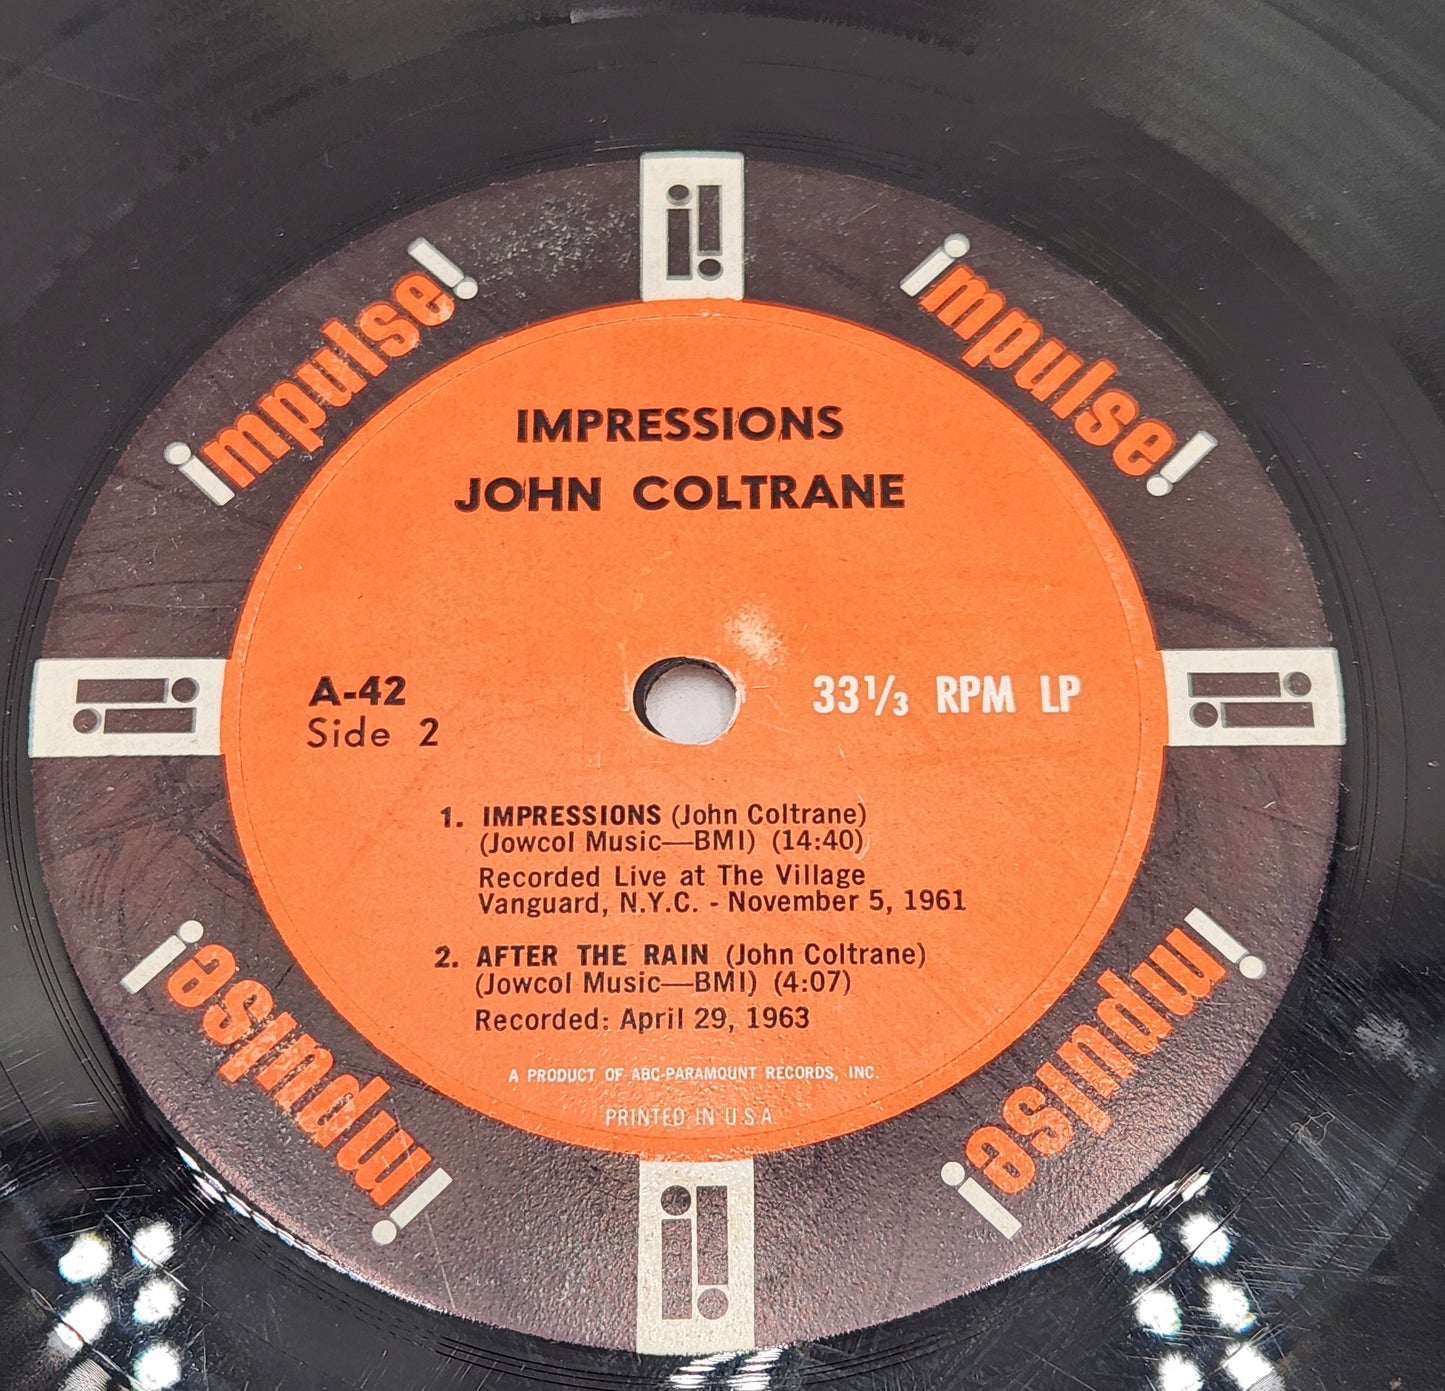 John Coltrane "Impressions" 1963 1st Mono Pressing Jazz Record Album